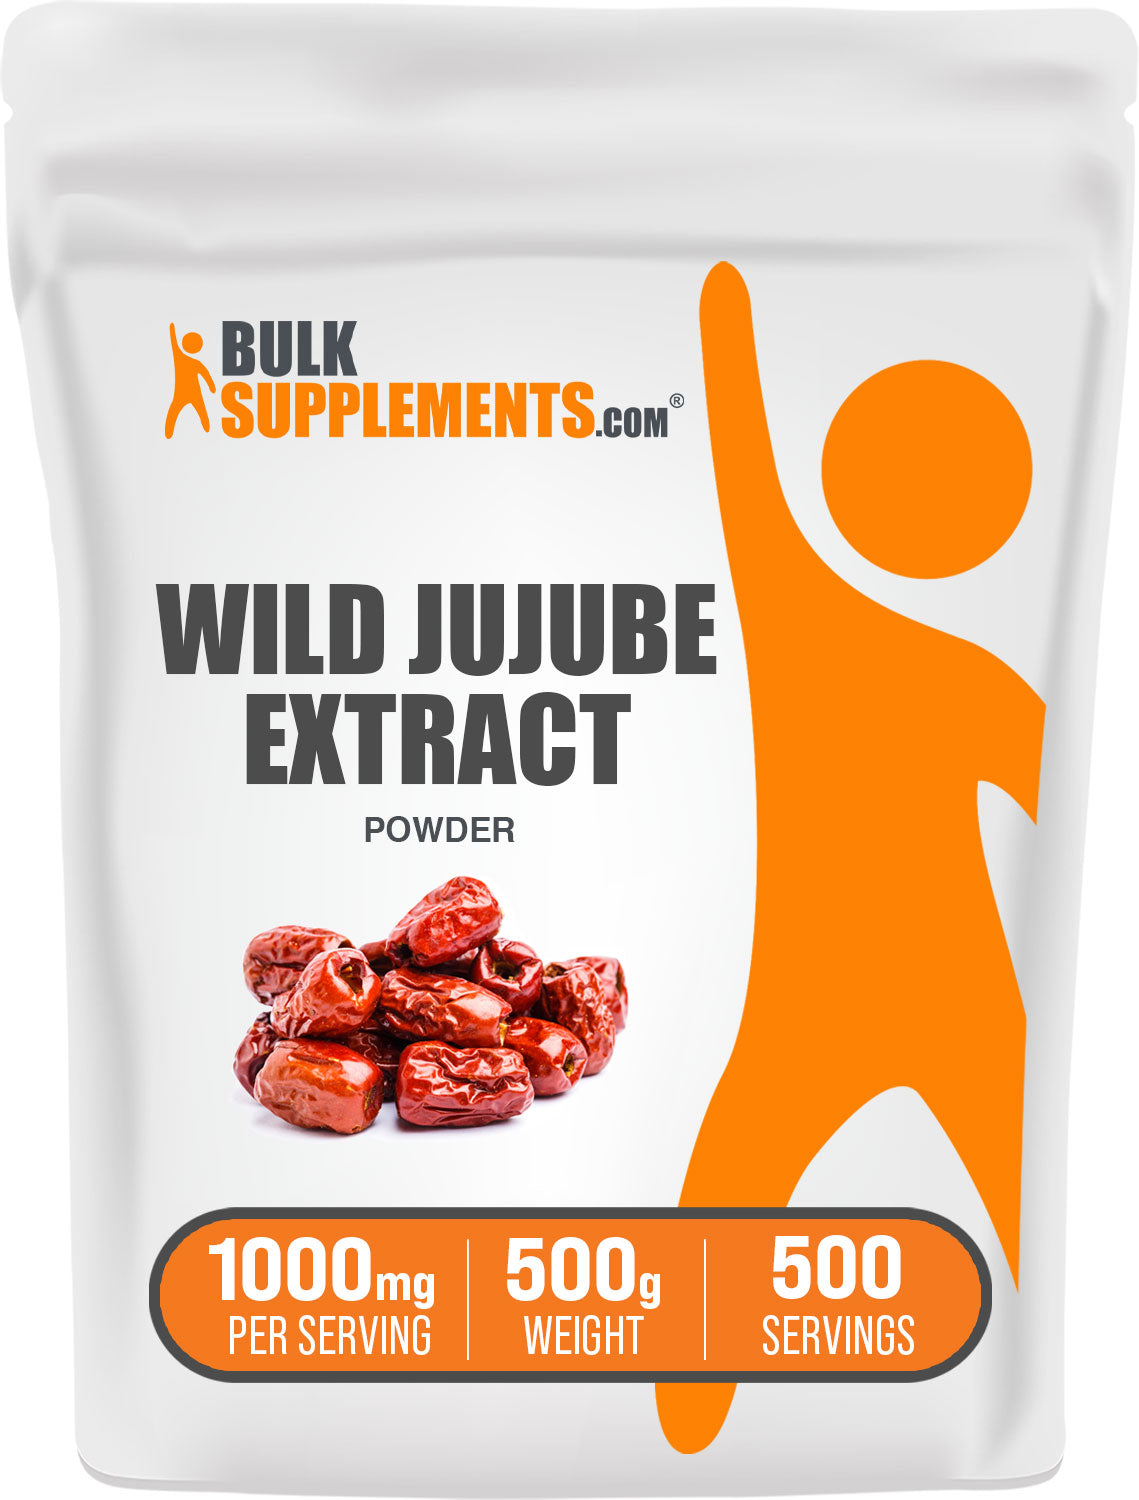 Wild Jujube Extract 500G Bag